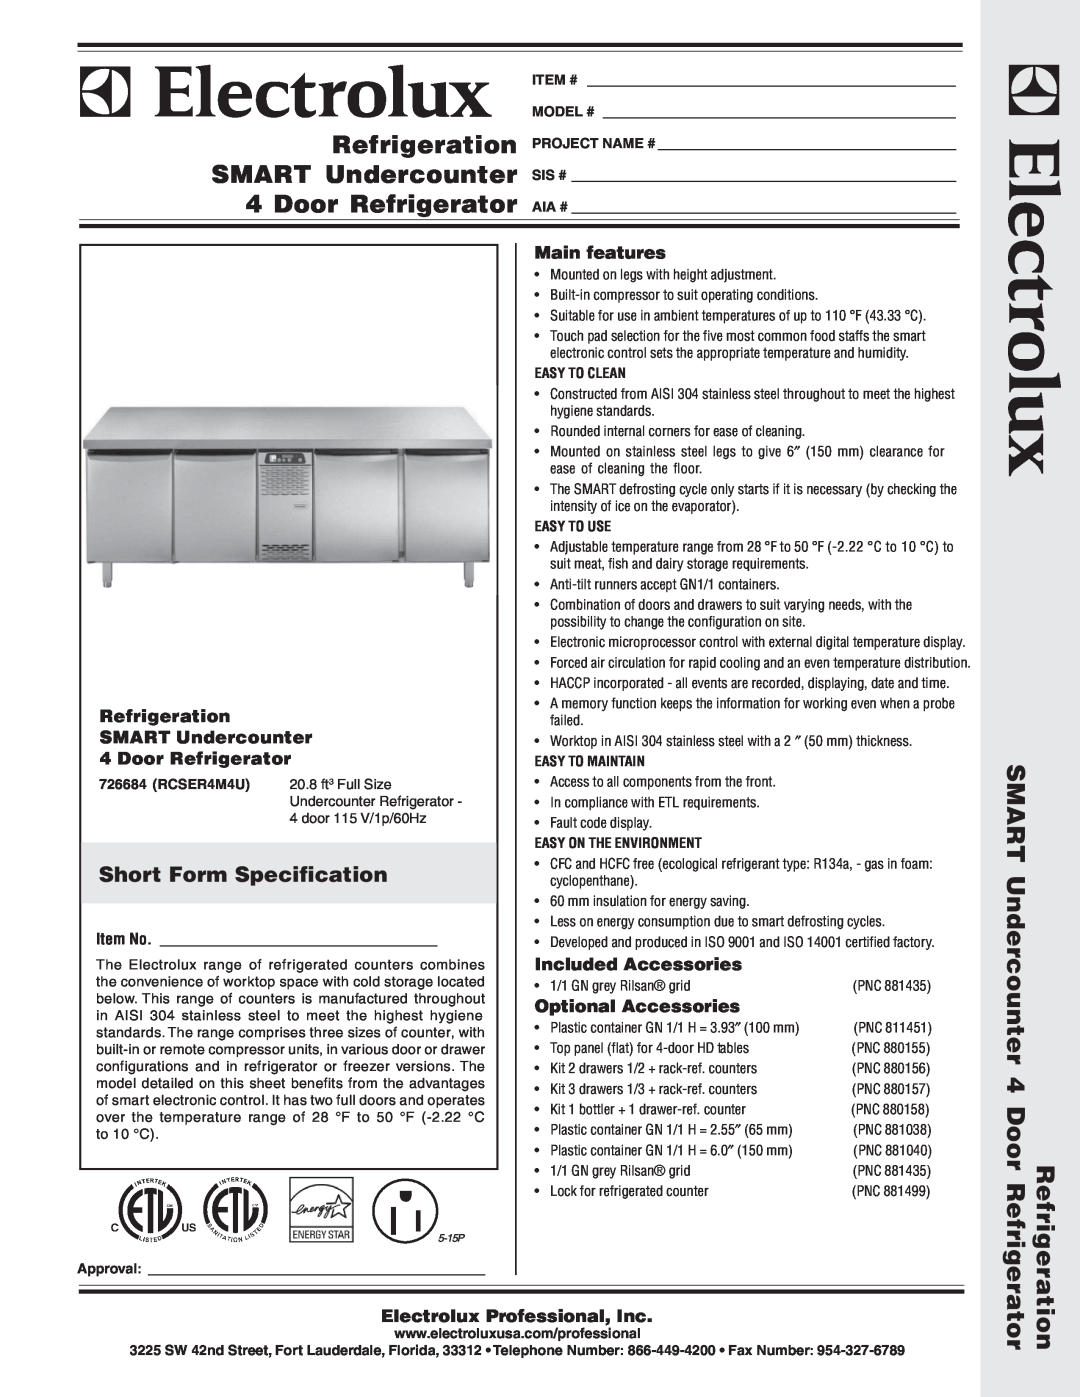 Electrolux RCSER4M4U manual Short Form Specification, Main features, Refrigeration, SMART Undercounter, Door Refrigerator 